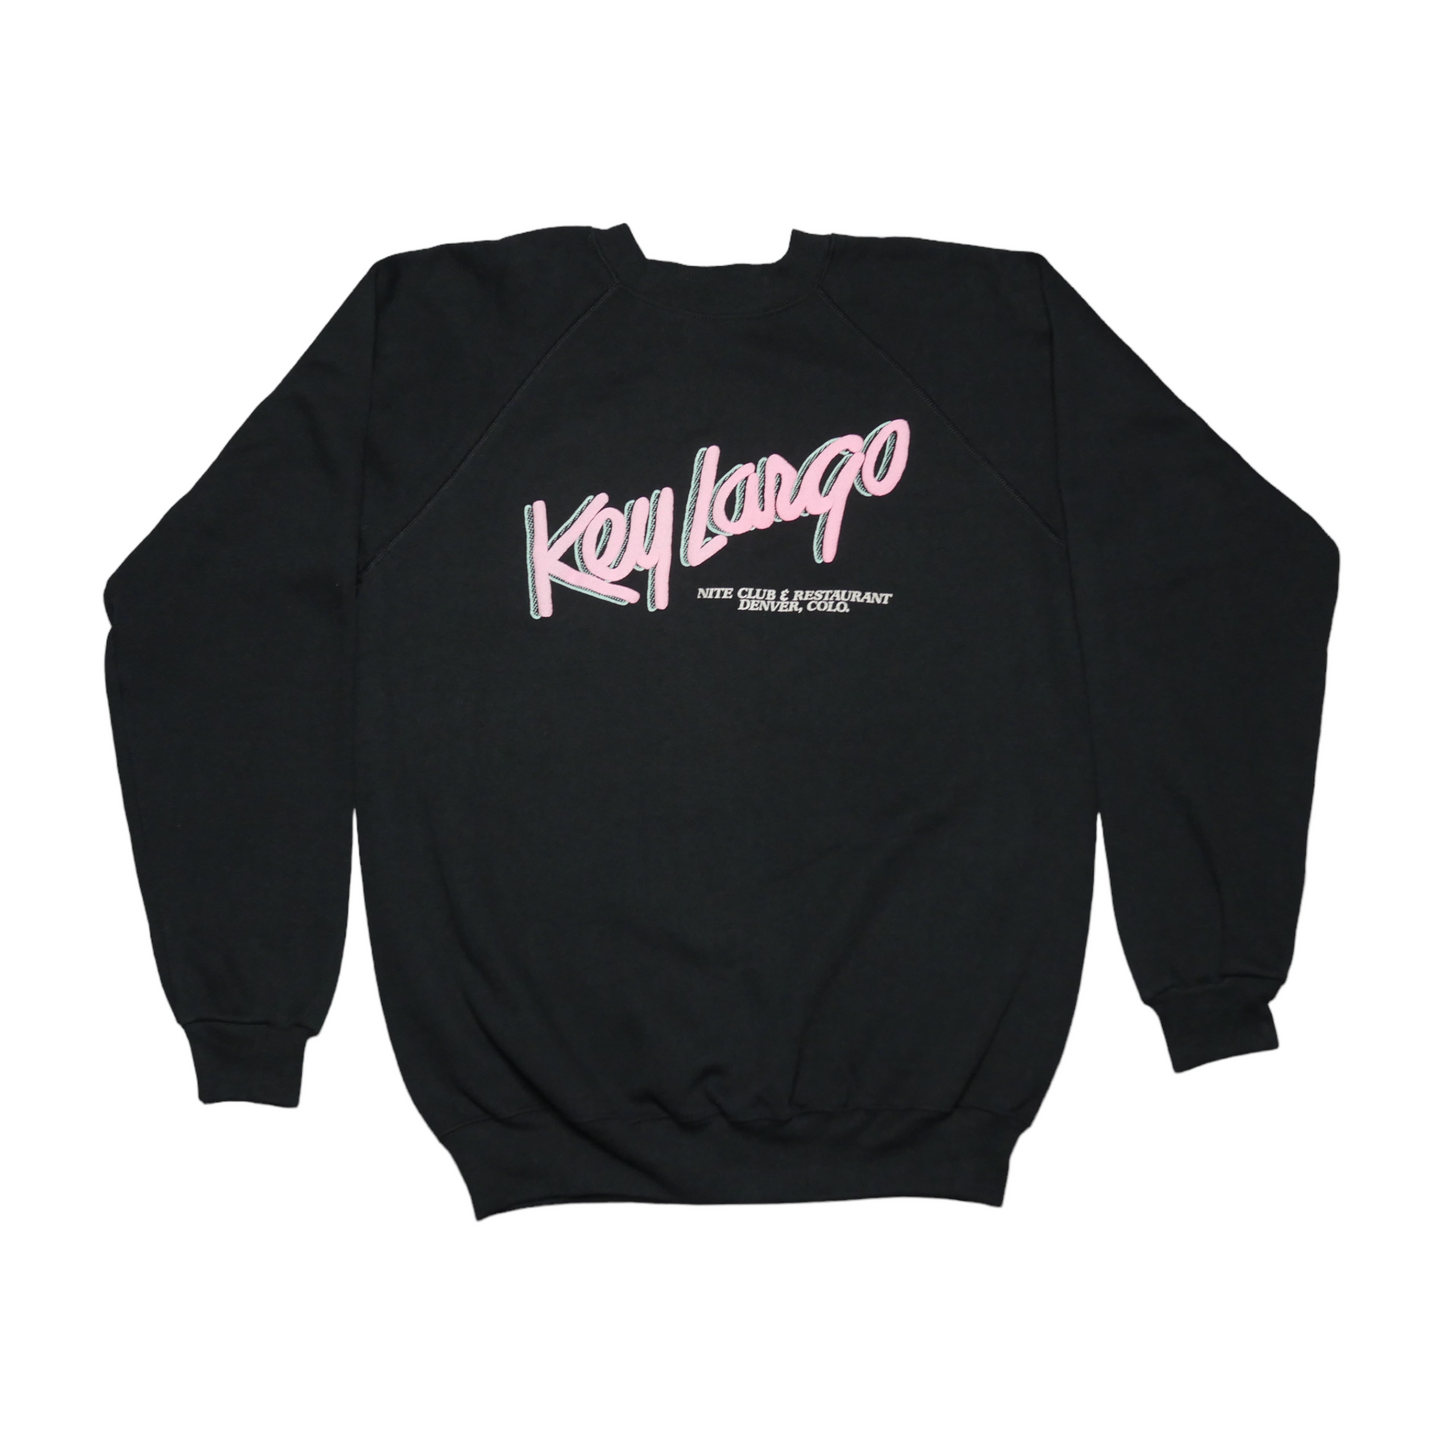 Key Largo Restaurant Denver Colorado Crewneck Sweatshirt - Large